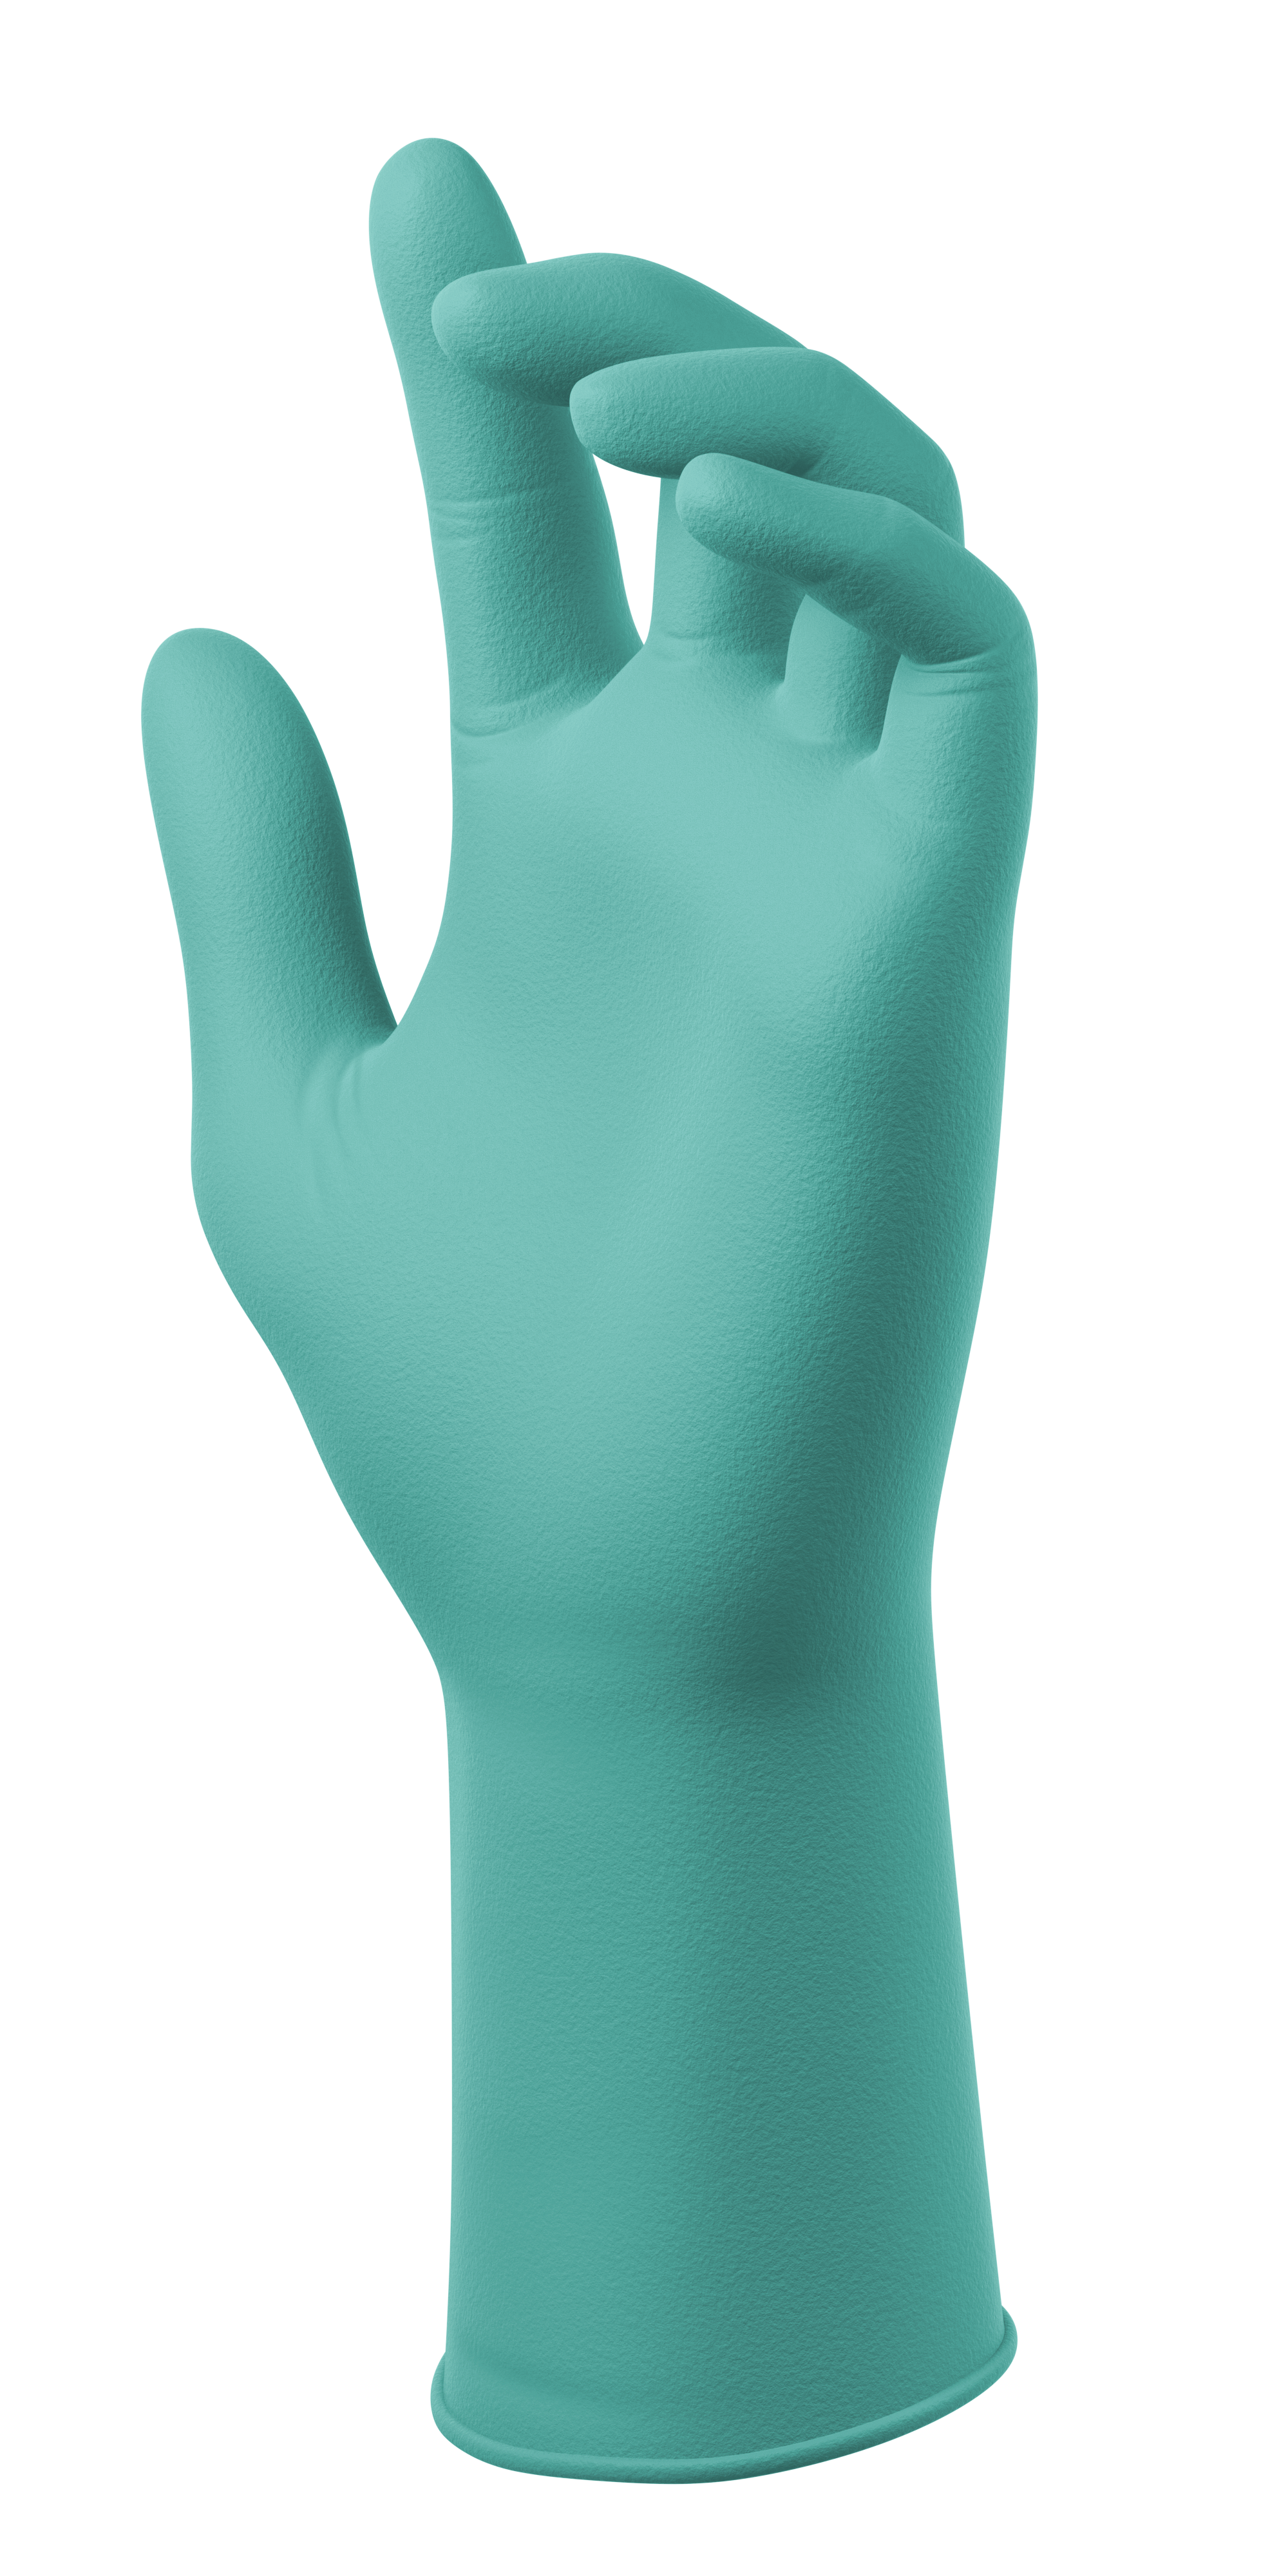 SW® TrueForm® TF-12LG Extended-Cuff Light Green 5.9mil Nitrile Exam Gloves (100 Per Box)